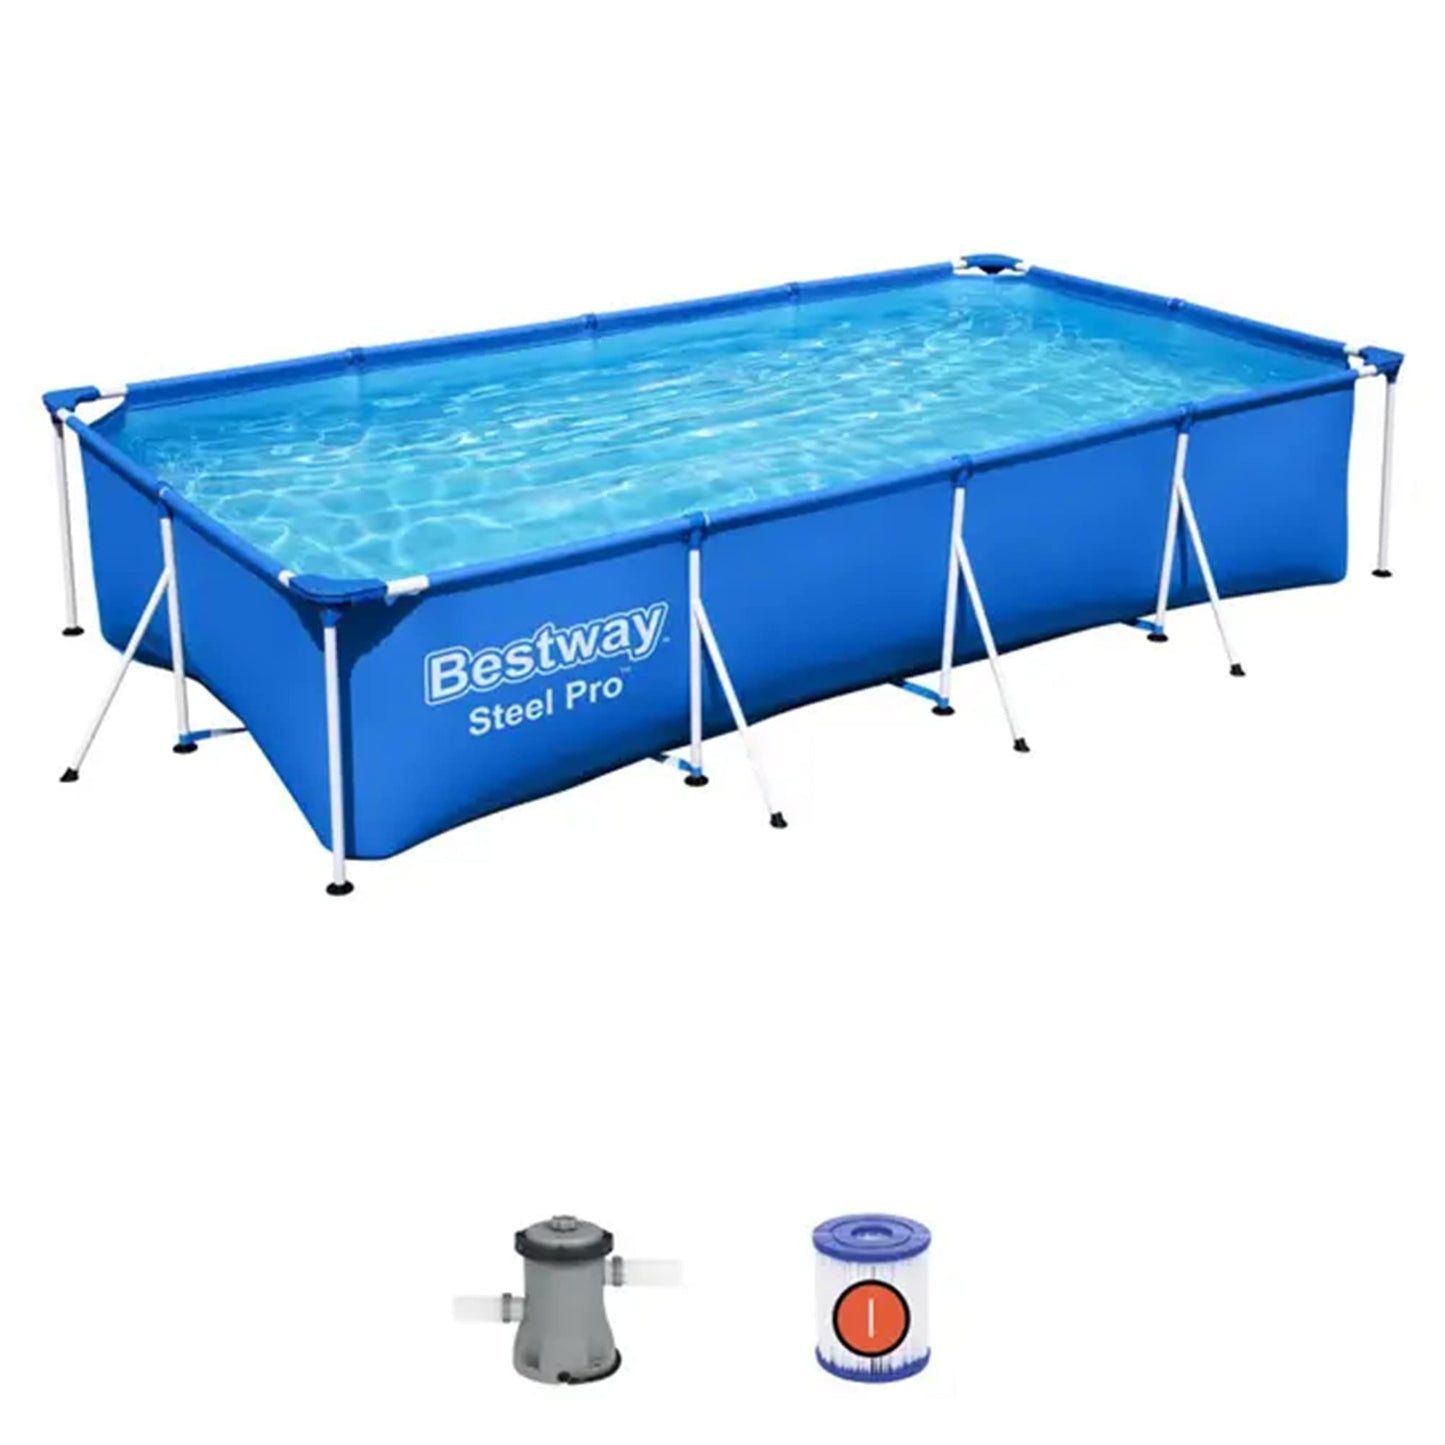 Bestway Steel Pro 13 Feet x 7 Feet x 32 Inch Rectangular Metal Frame Above Ground Outdoor Backyard Swimming Pool, Blue (Pool Only) 13' x 7' x 32"